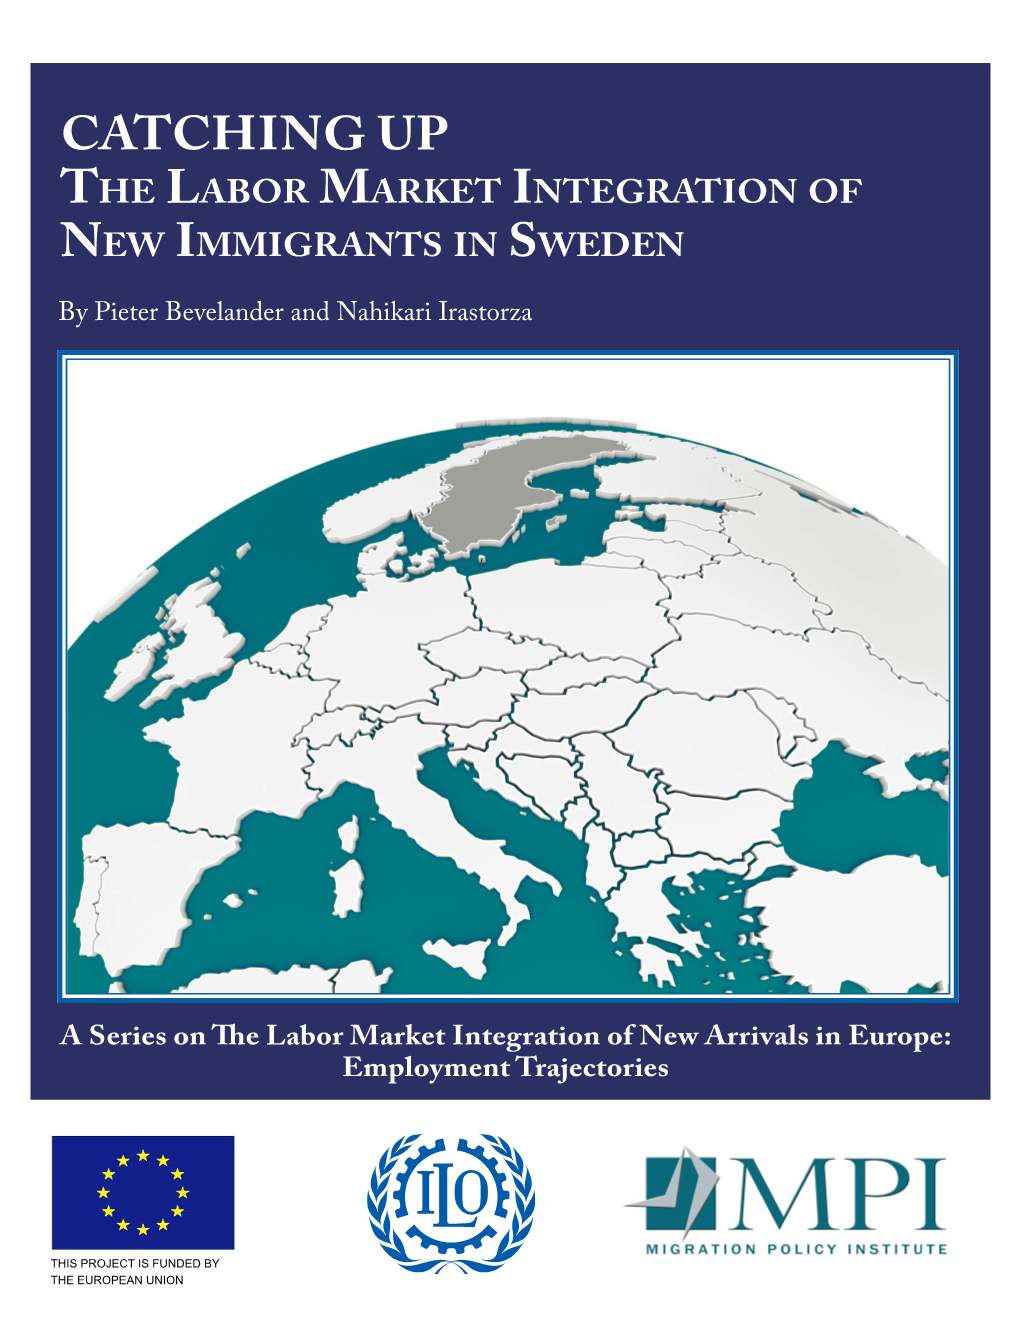 The Labor Market Integration of New Immigrants in Sweden by Pieter Bevelander and Nahikari Irastorza